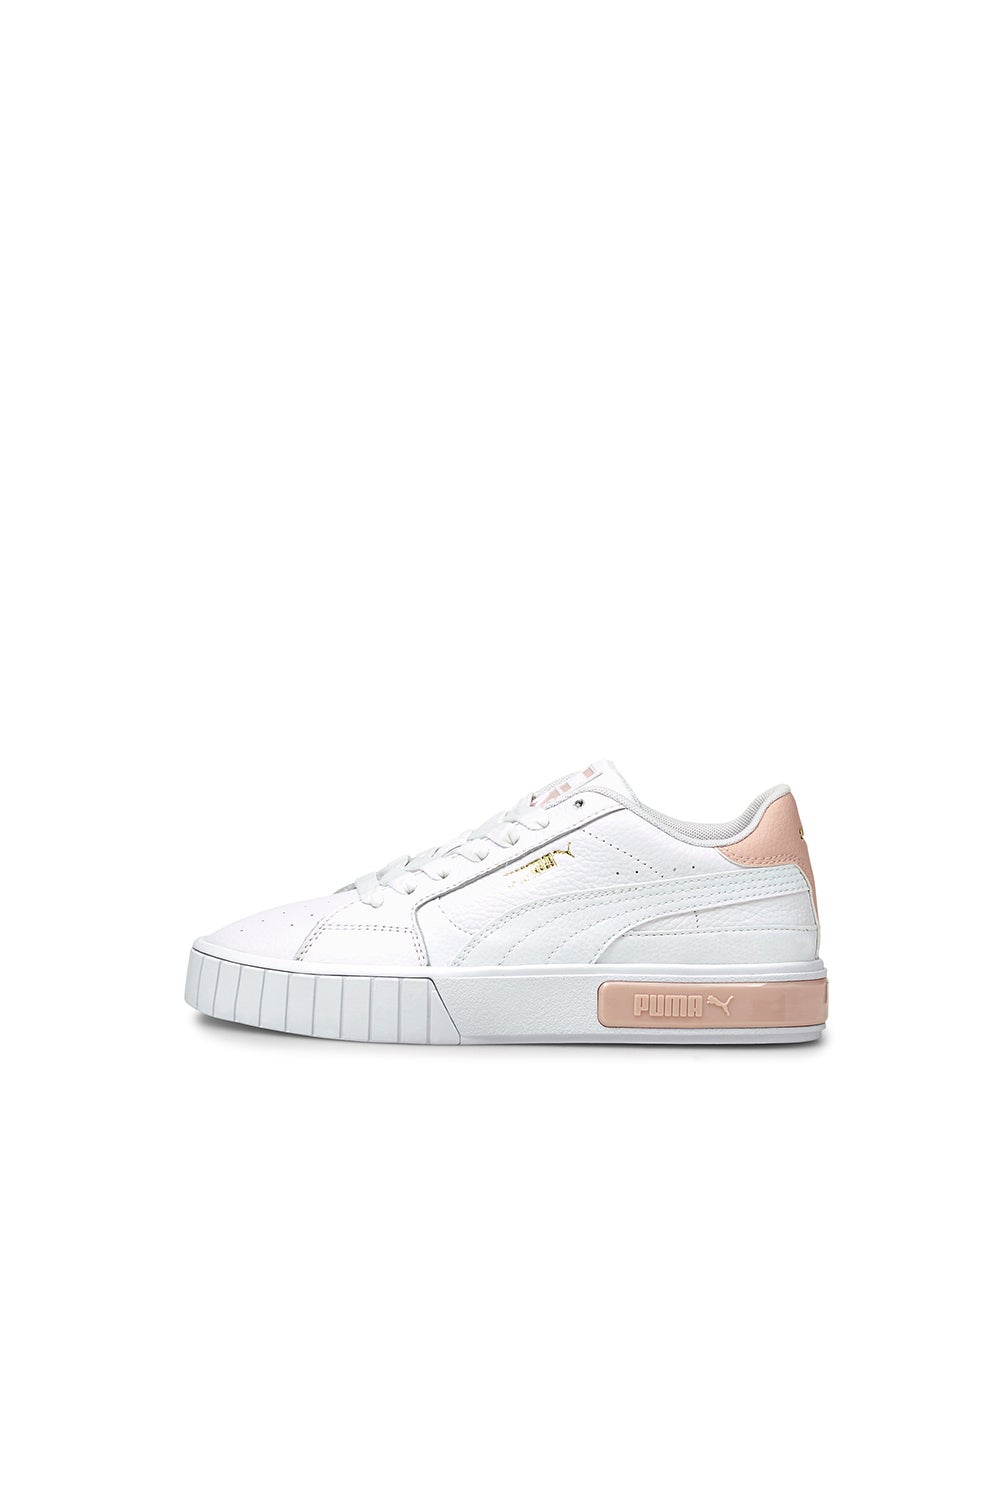 Puma Cali Star Sneakers White/Cloud Pink